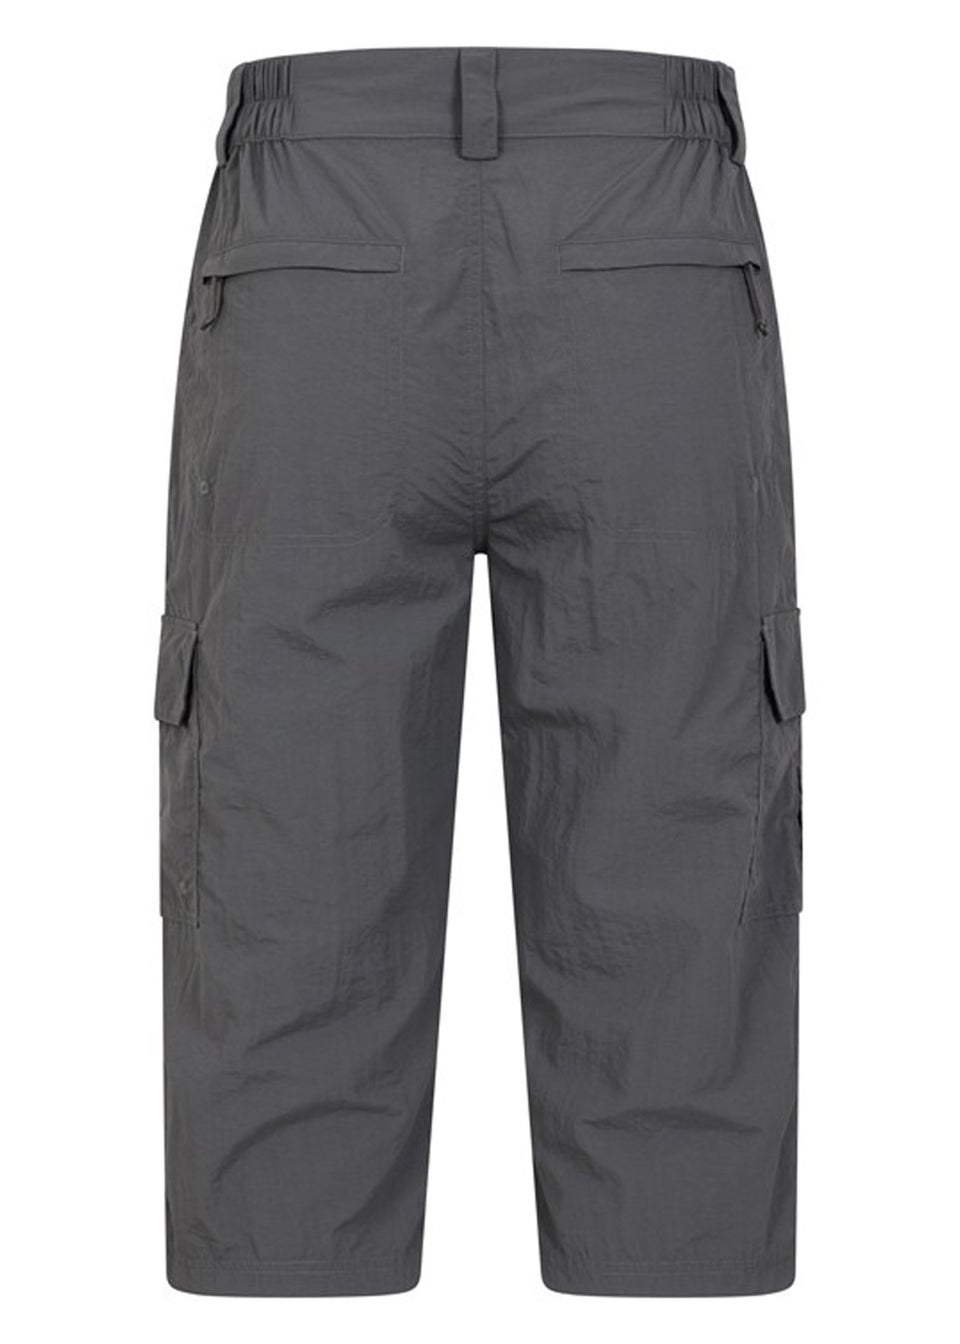 Mountain Warehouse Grey Explore Shorts